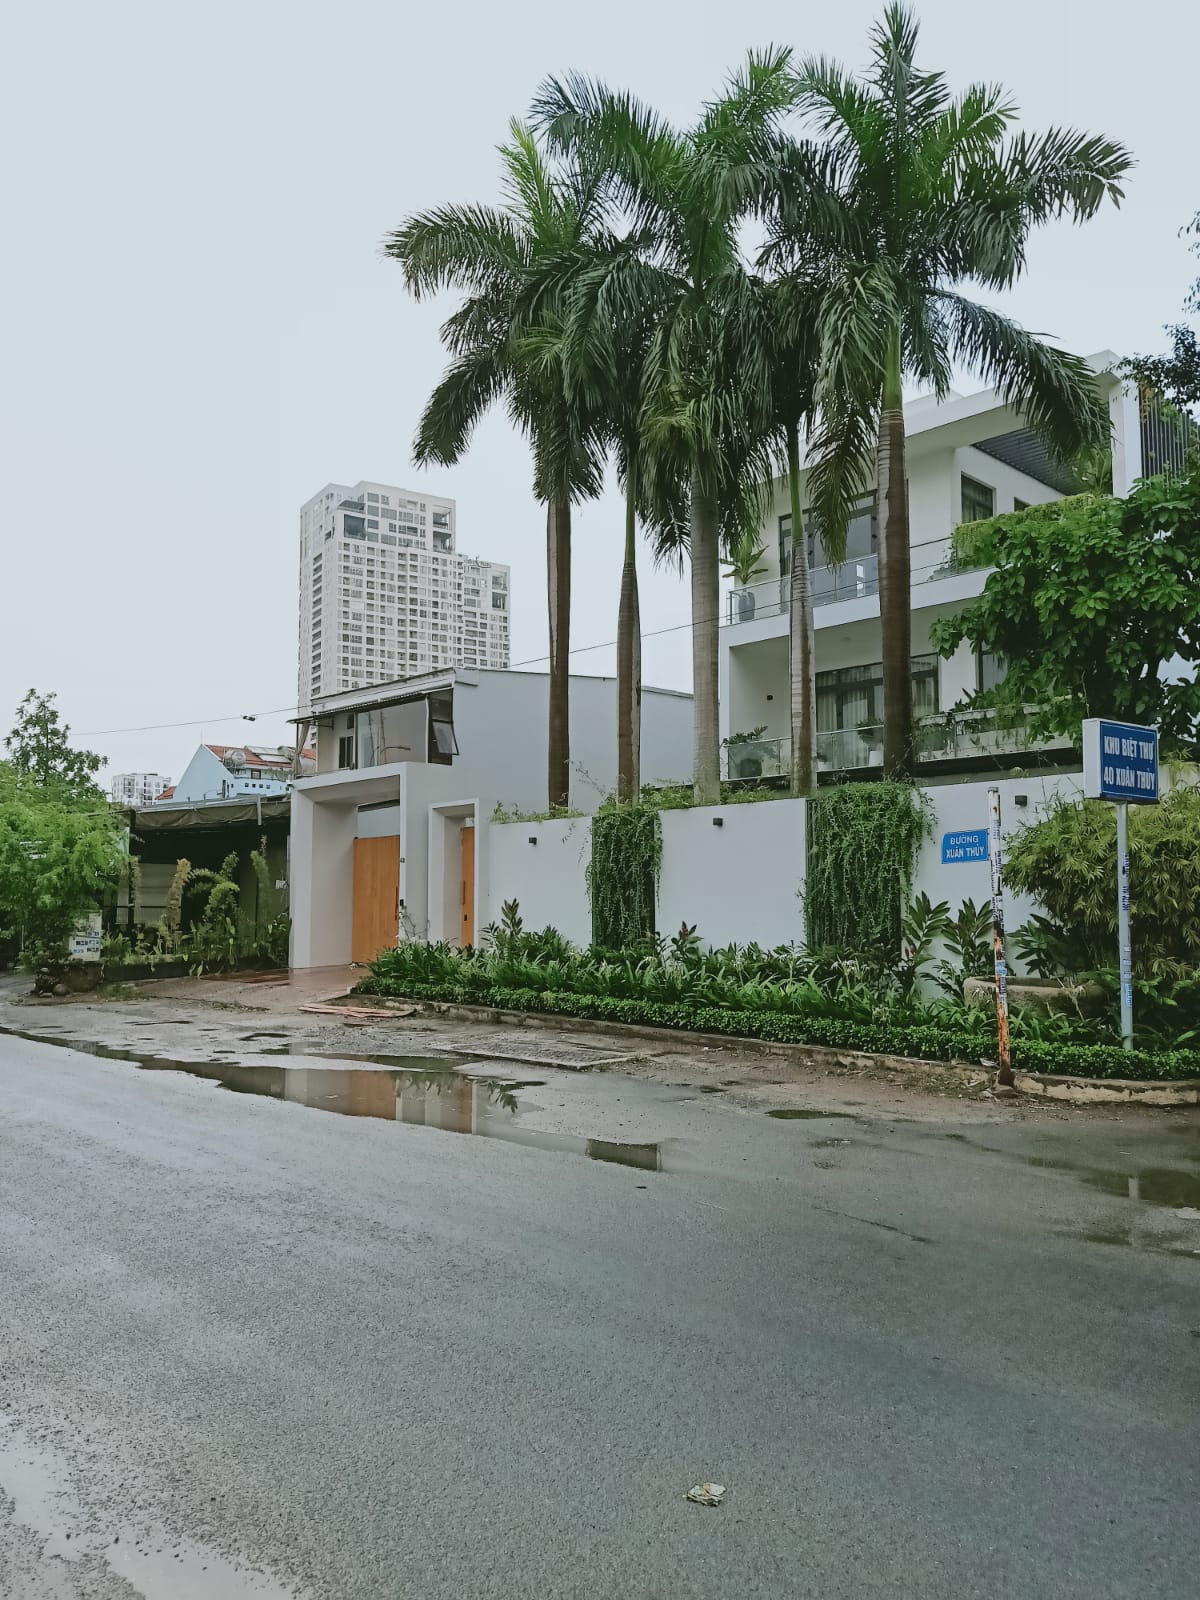 Architecture of the Empty, Saigon, 2020